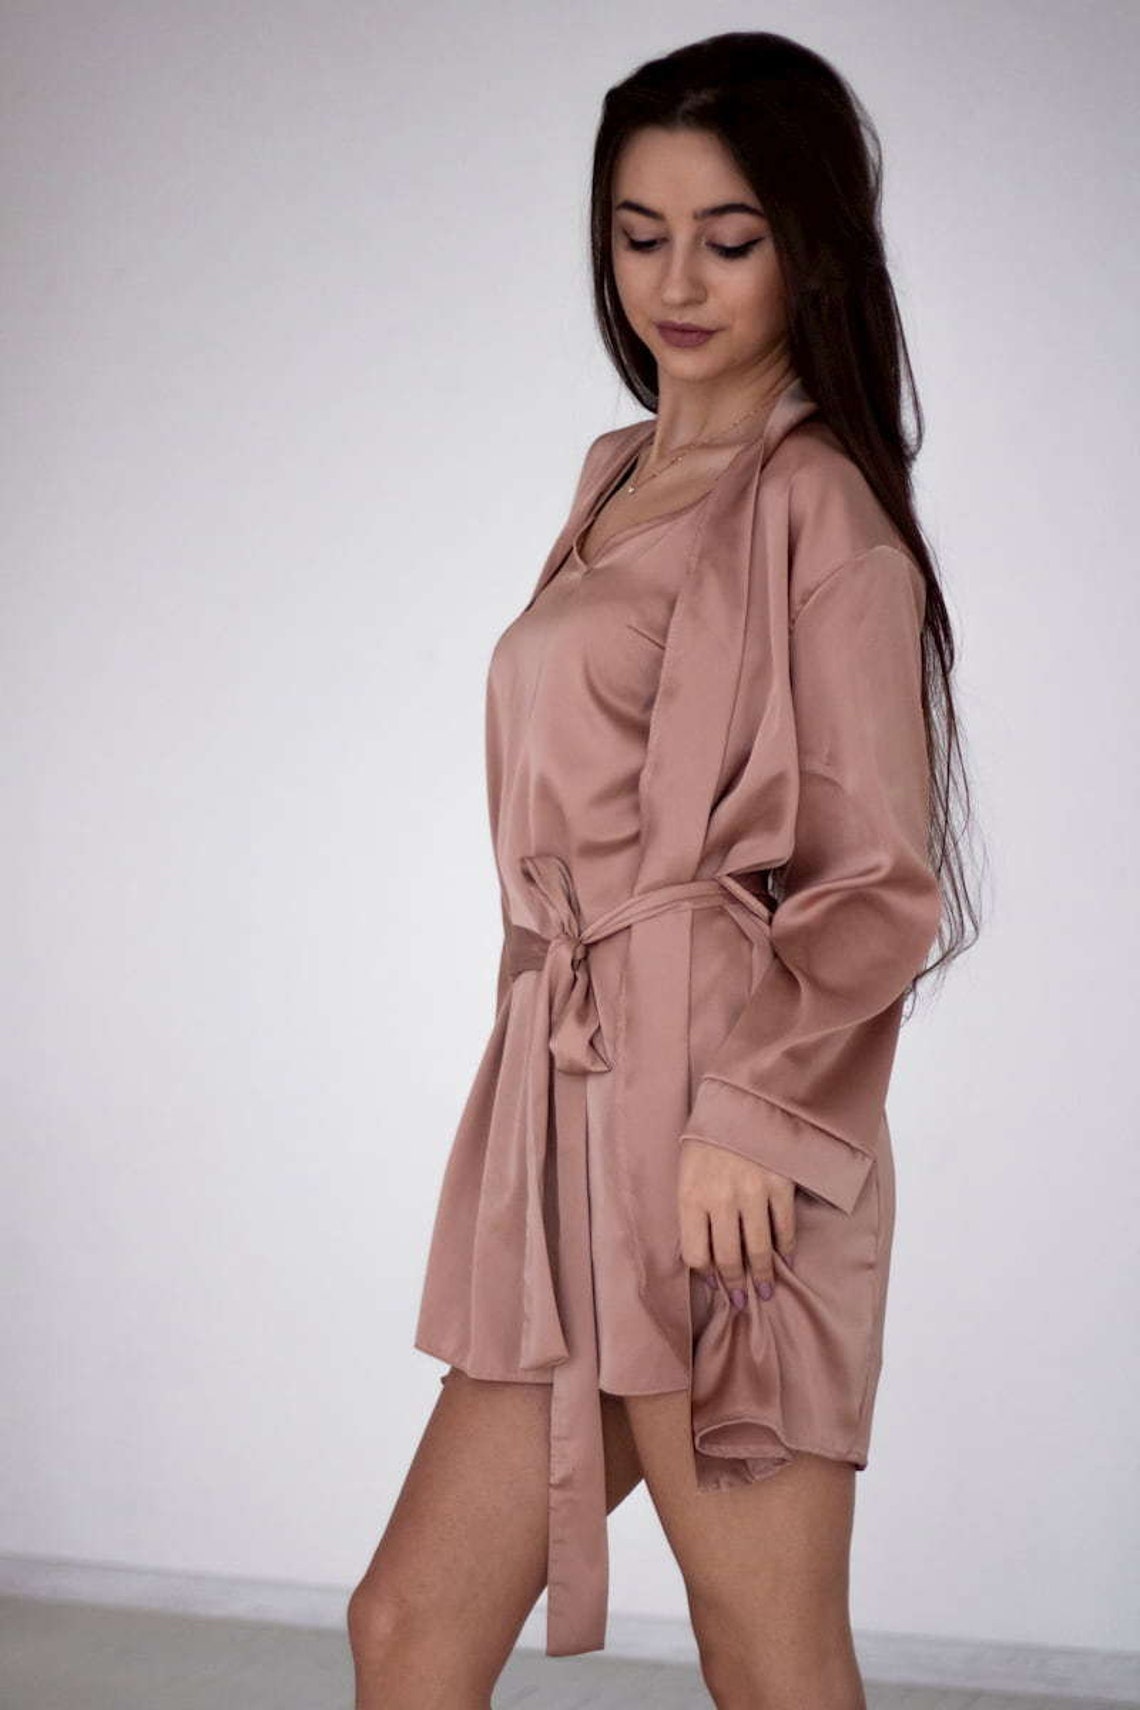 Sexy Robe For Girls Women Teen Homewear Best Silk Good Cotton | Etsy